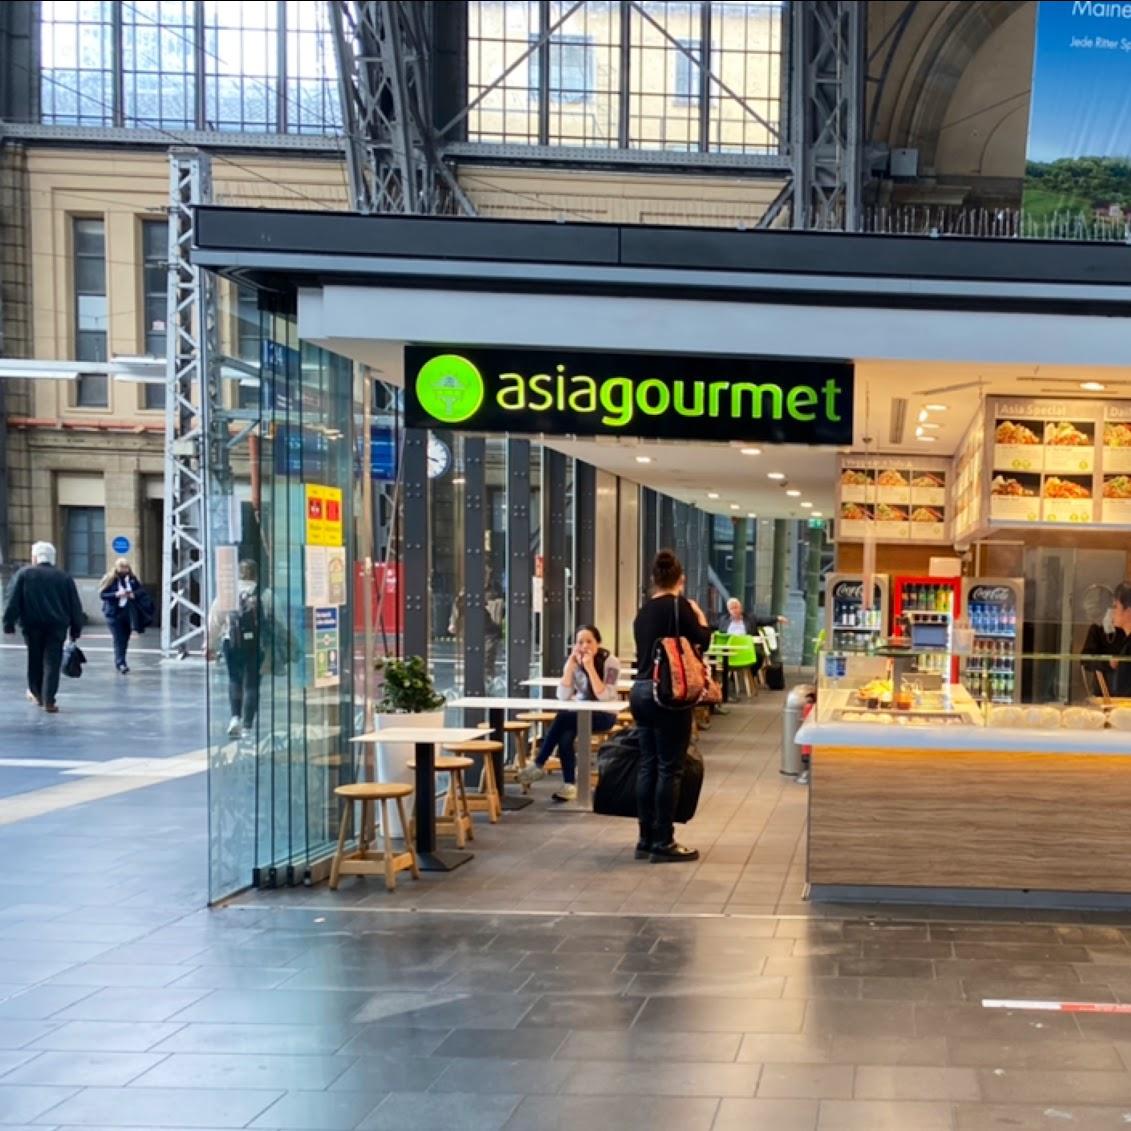 Restaurant "Asiagourmet" in Frankfurt am Main